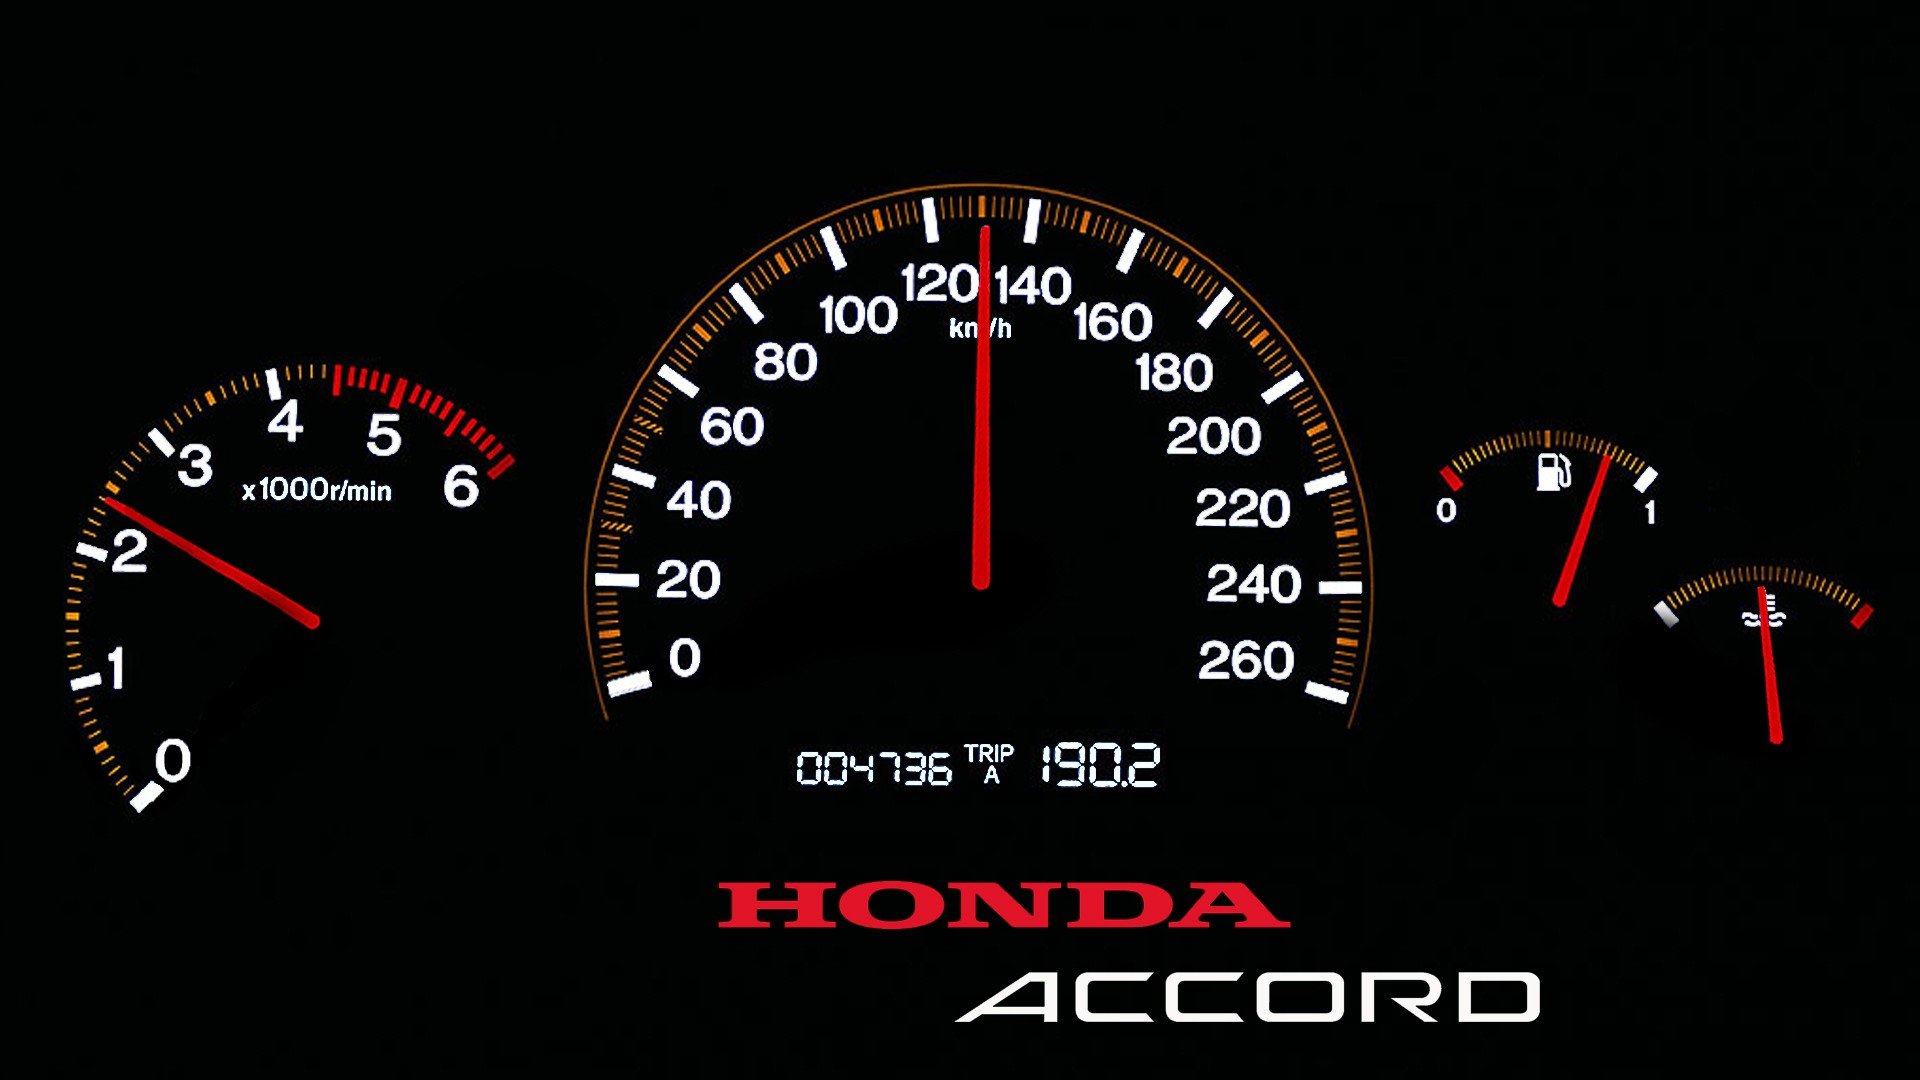 Honda Honda Accord Wallpapers Hd Desktop And Mobile Backgrounds